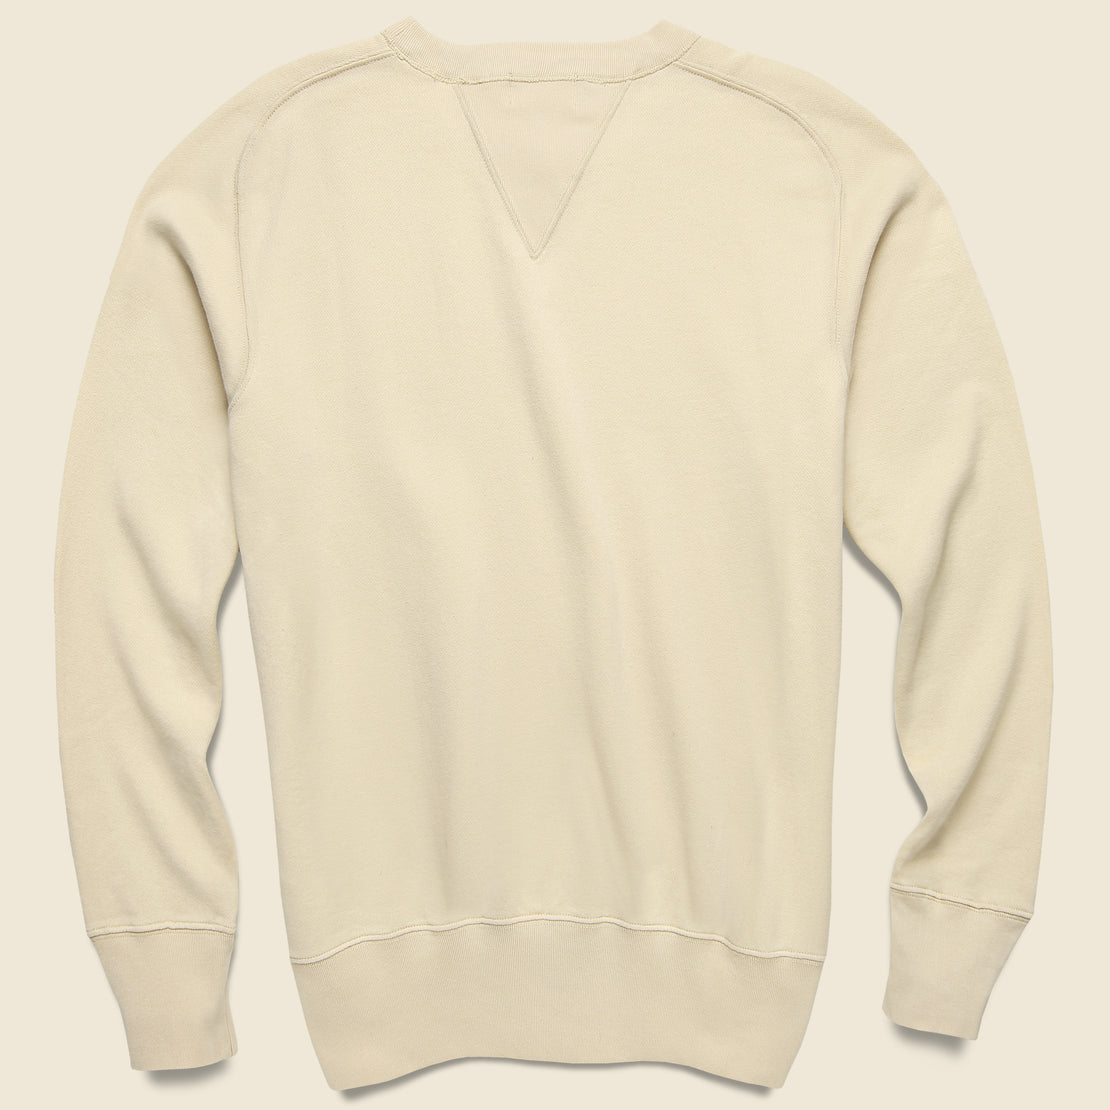 Bay Meadows Sweatshirt - Double Cream - Levis Vintage Clothing - STAG Provisions - Tops - Fleece / Sweatshirt